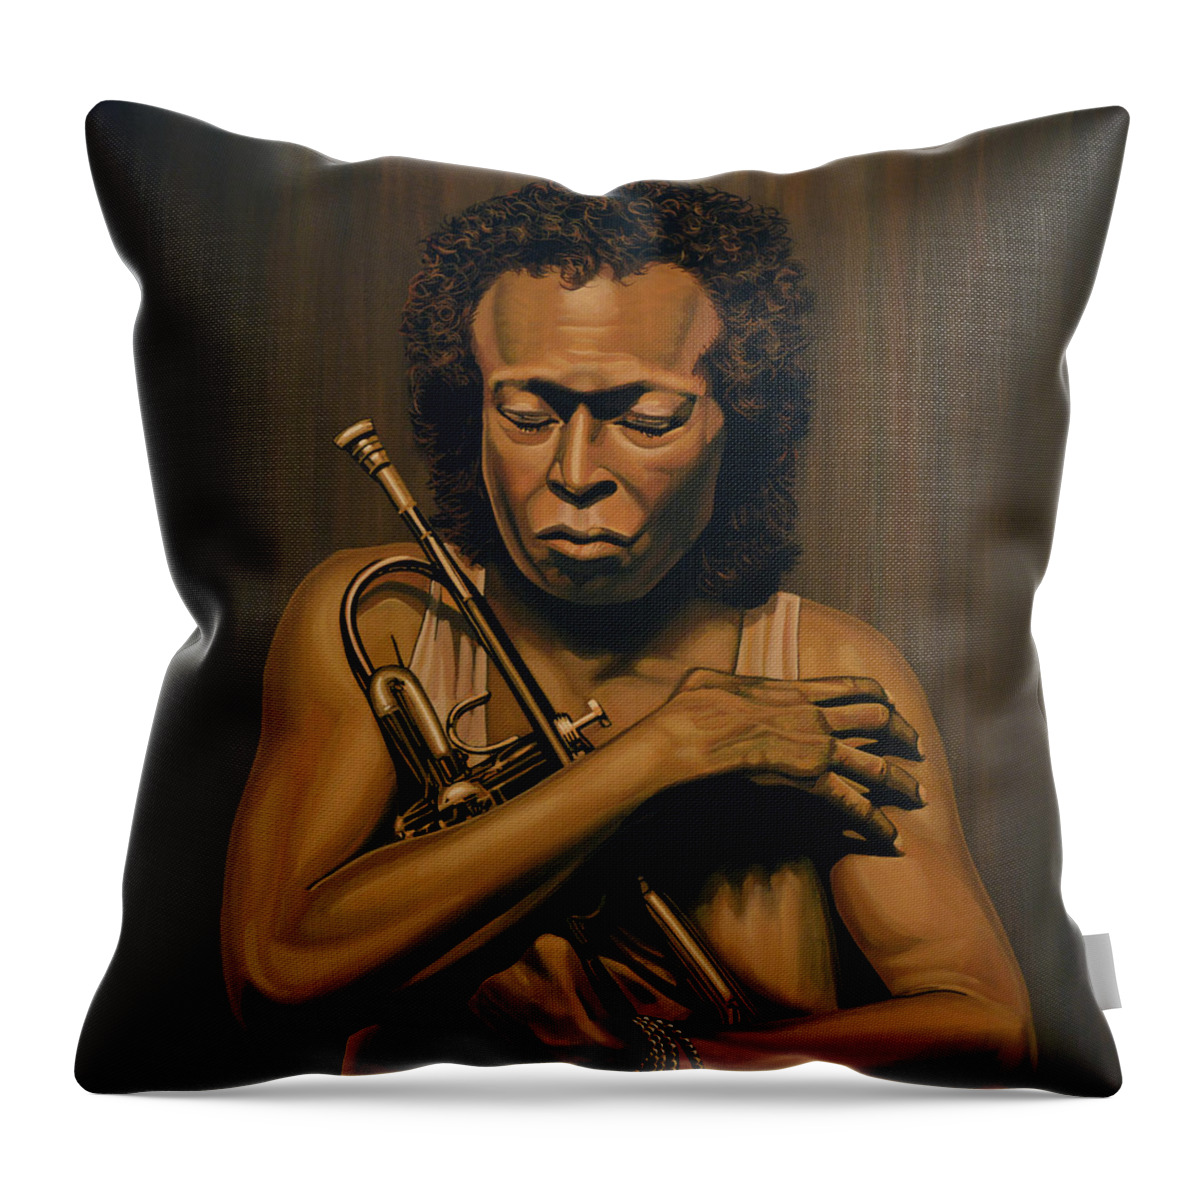 Miles Davis Throw Pillow featuring the painting Miles Davis Painting by Paul Meijering